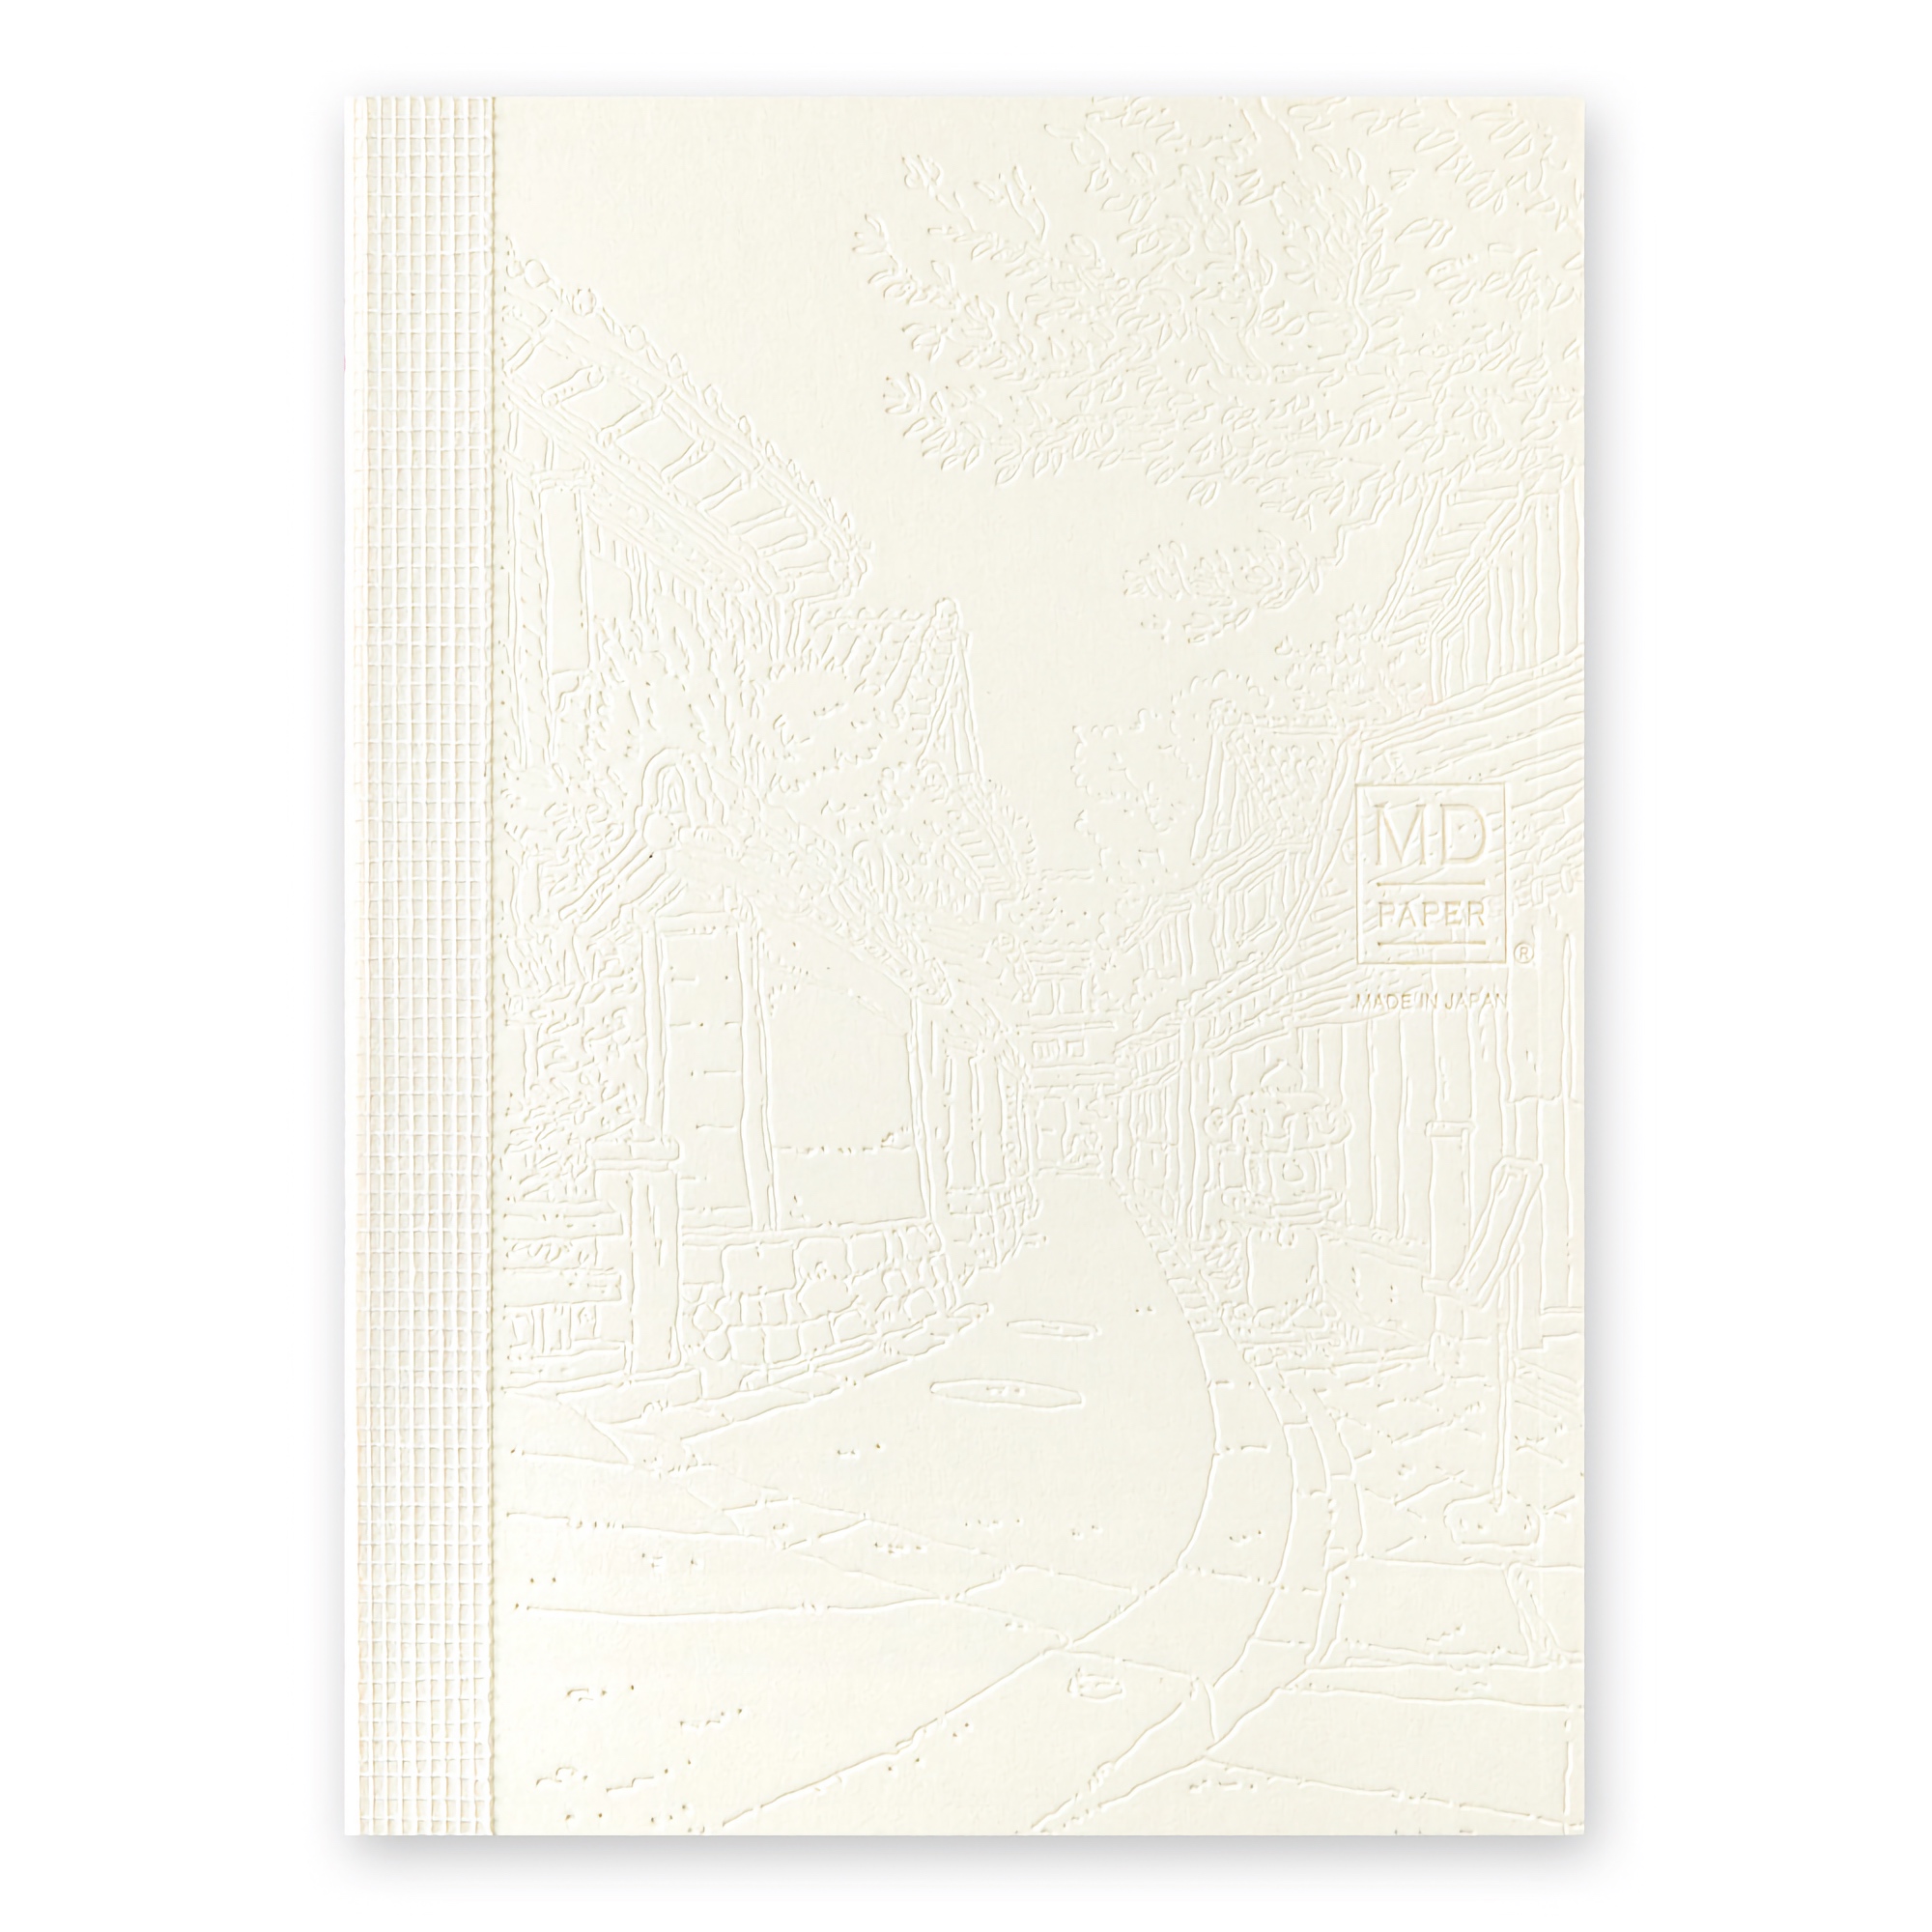 Midori MD Notebook [A6] Blank Artist Collaboration Mateusz Urbanowicz 15th Anniversary [Limited Edition]